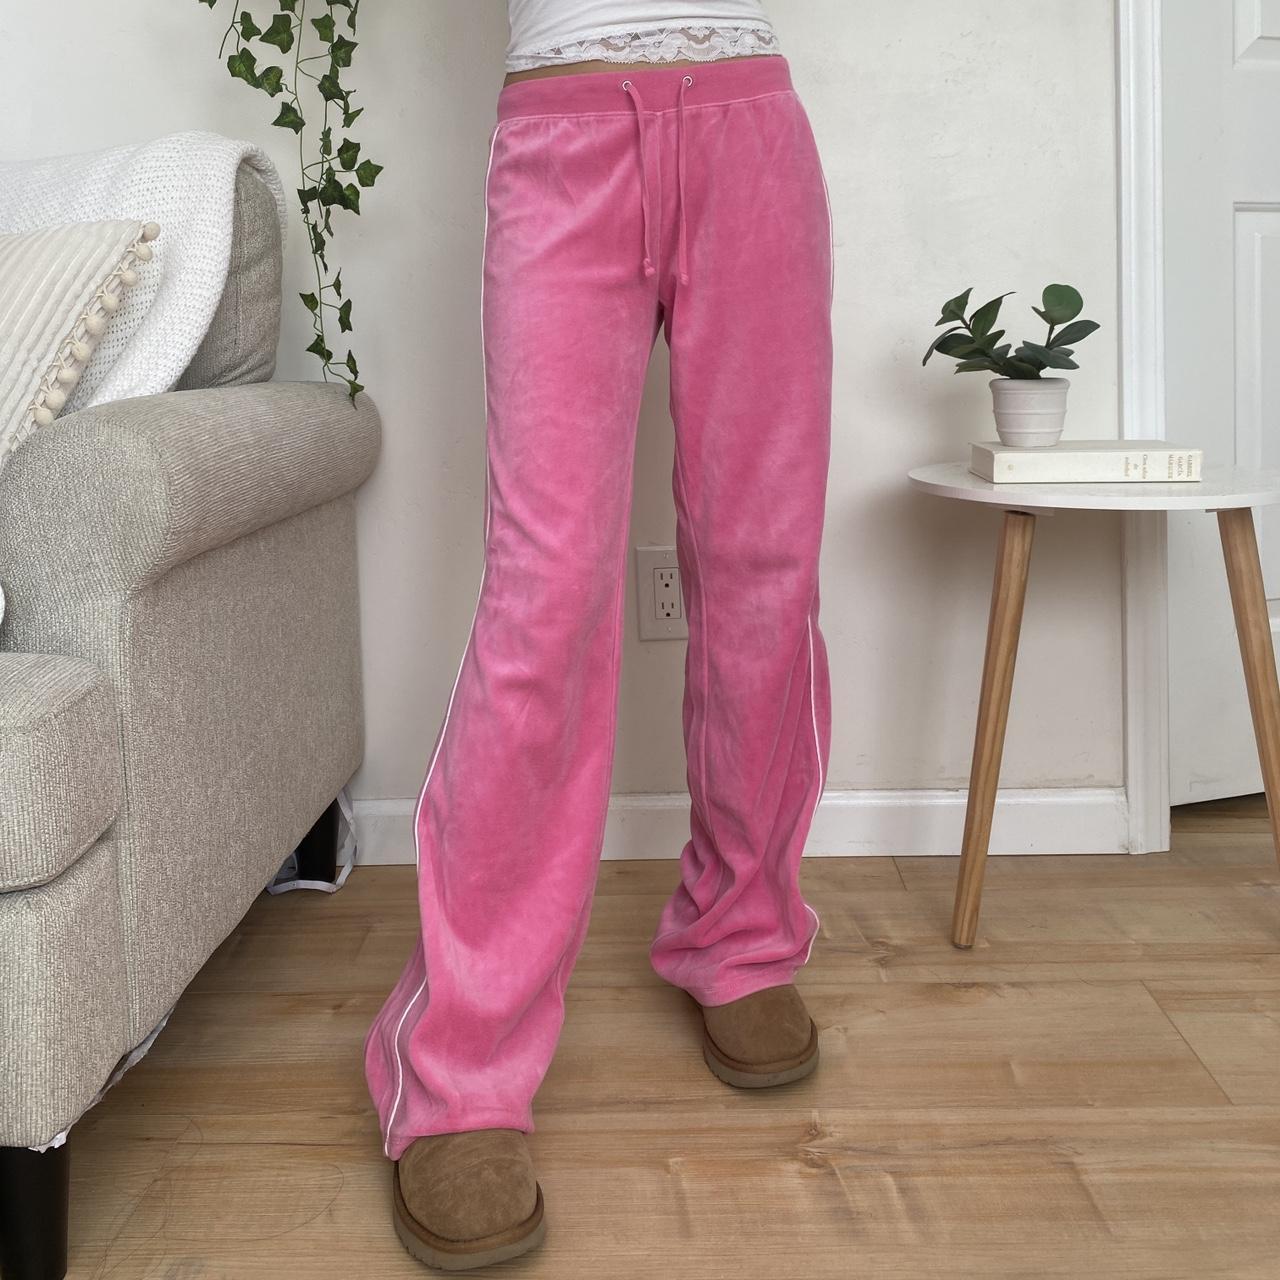 00s Pink Velour Sweatpants - Low rise - Flare hem...